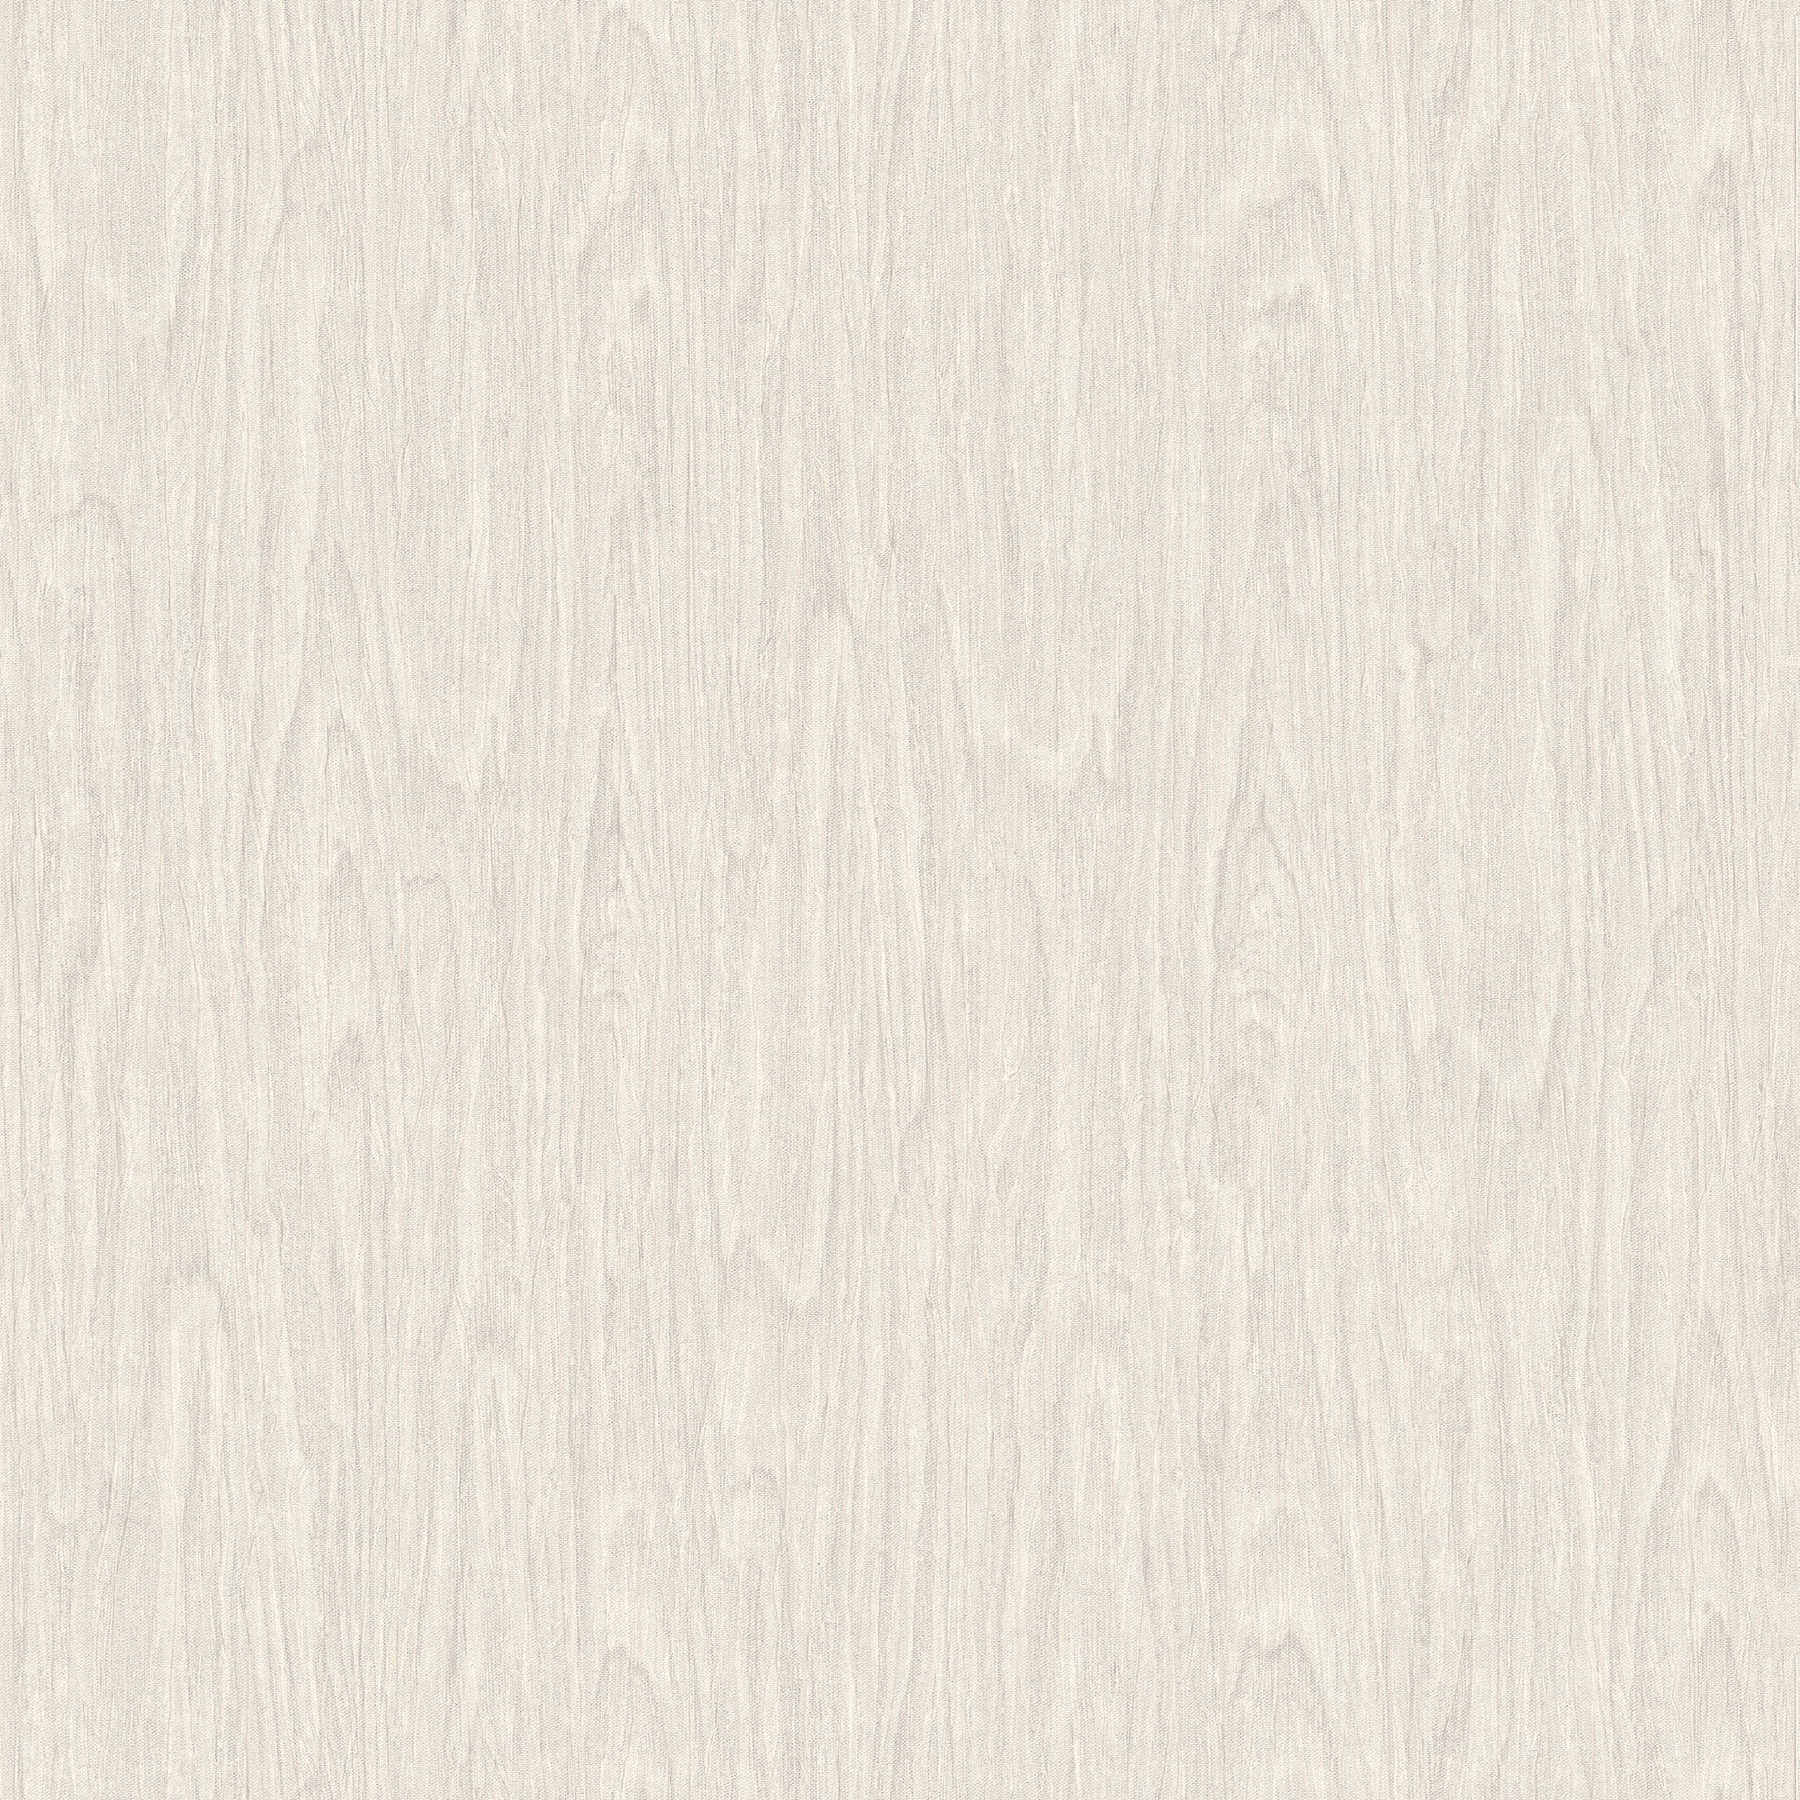 VERSACE Home wallpaper realistic wood look - beige, cream, white
